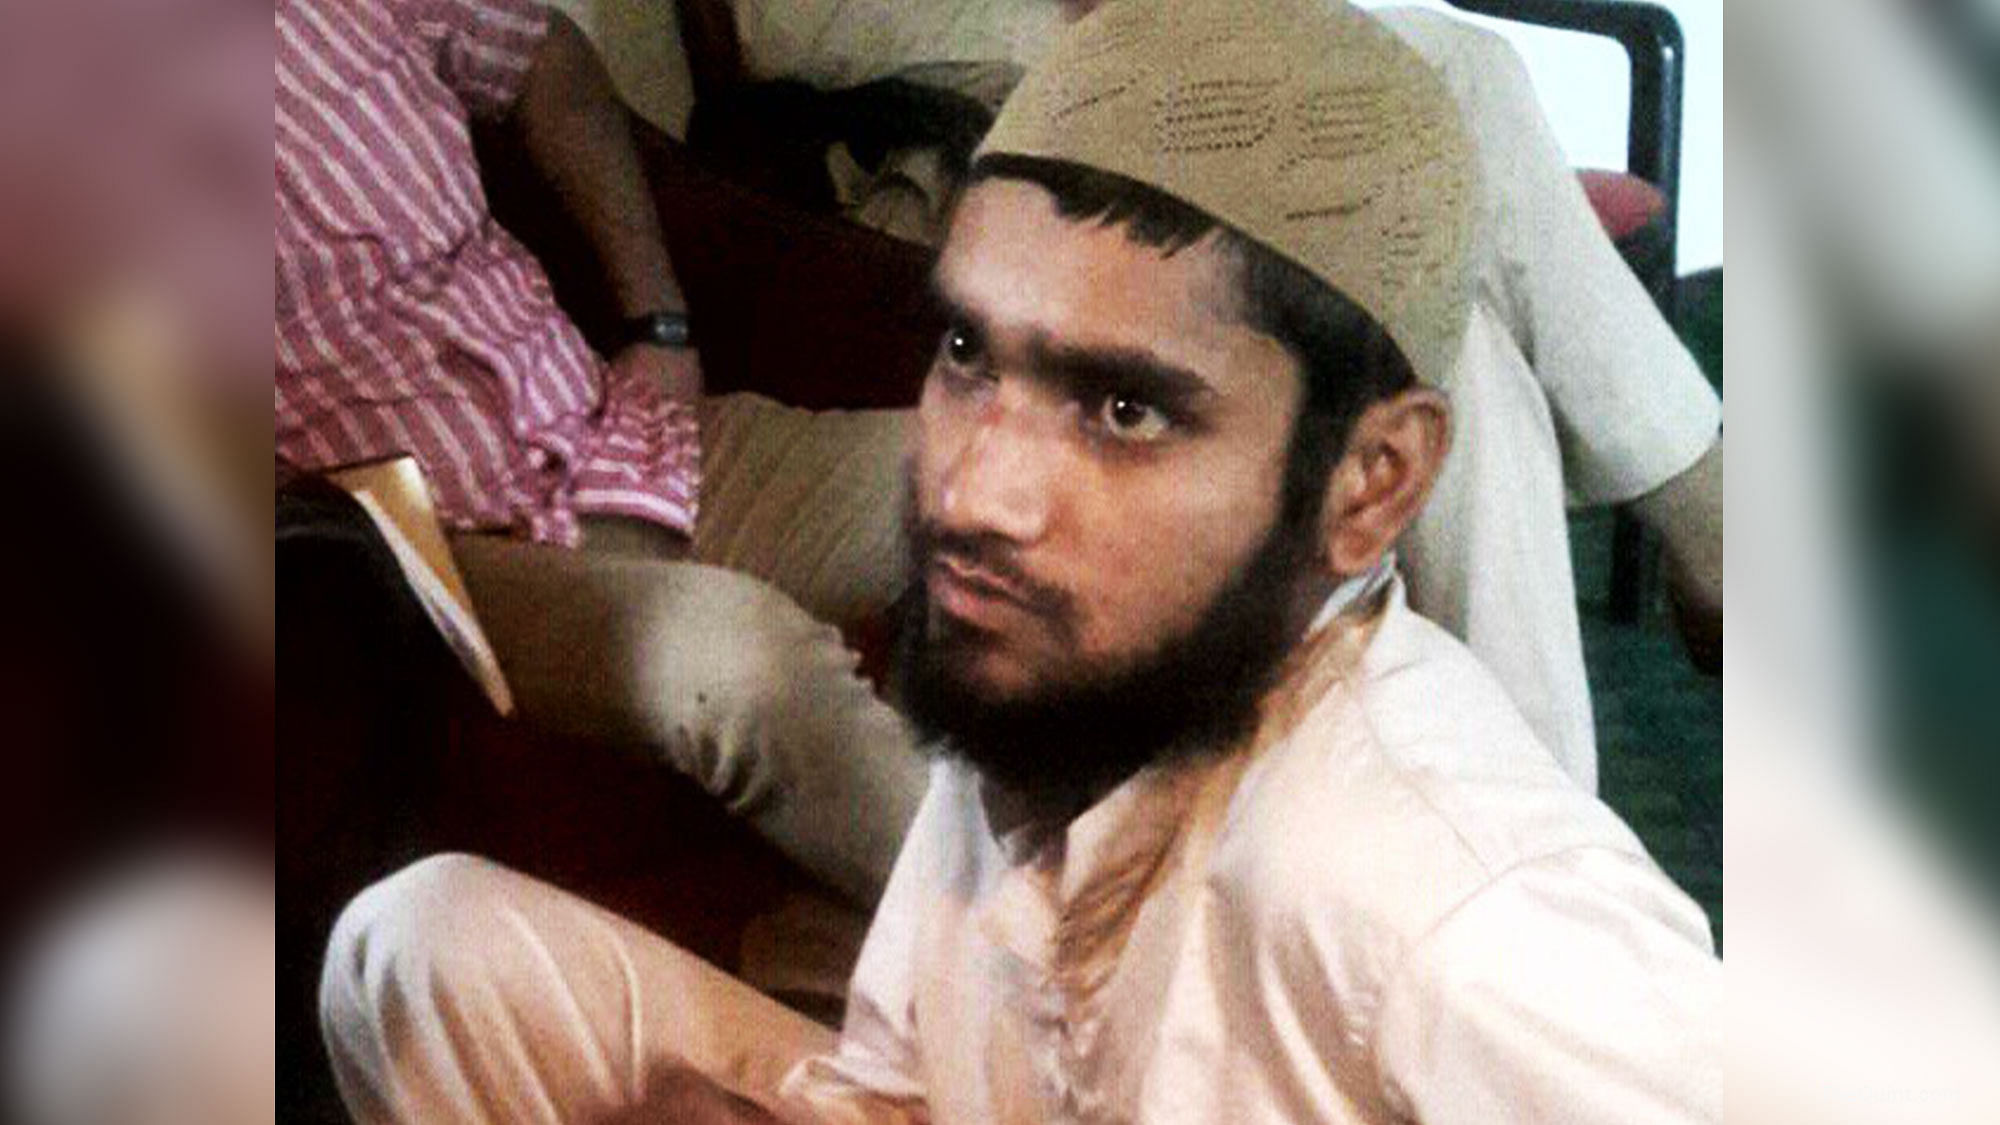 Bahadur Ali, the LeT militant captured in Kupwara, Kashmir on Tuesday, 26 July 2016. (Photo Courtesy: Twitter/<a href="https://twitter.com/manakgupta/status/758496493871345665">@manakgupta</a>/altered by <b>The Quint</b>)